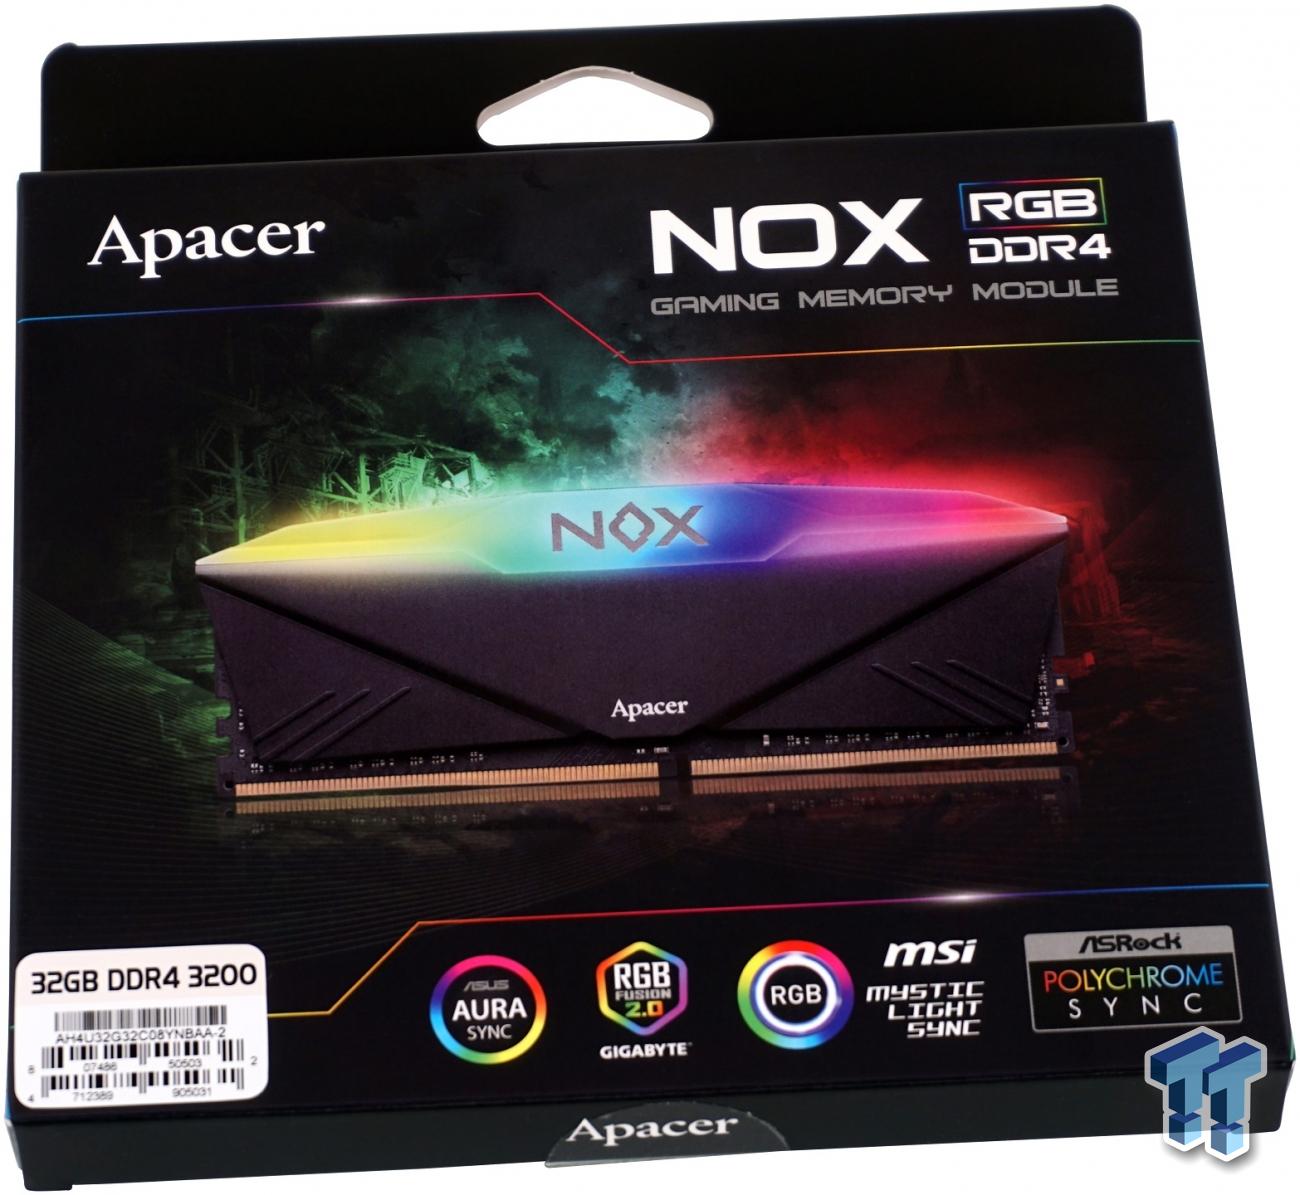 Apacer Nox Rgb Ddr4 30 32gb Memory Kit Review Tweaktown